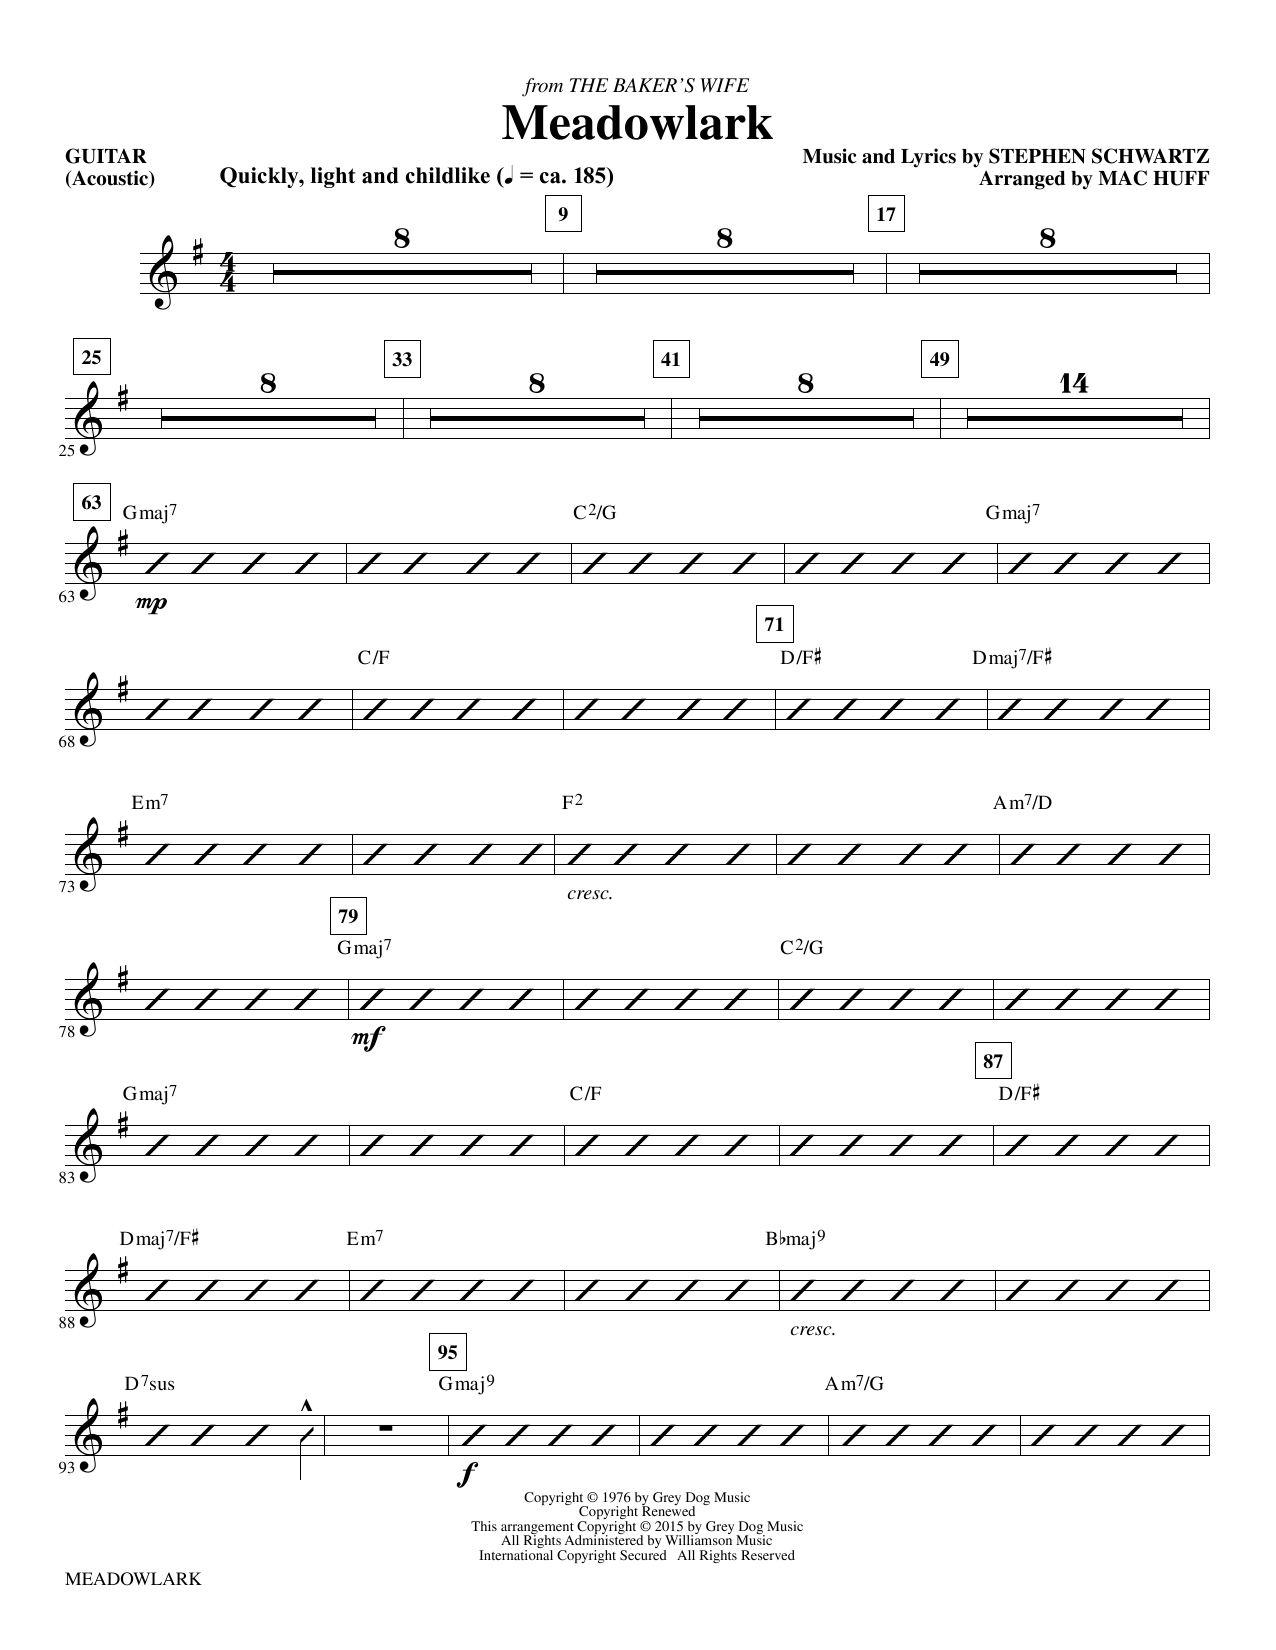 Mac Huff Meadowlark - Guitar sheet music notes and chords. Download Printable PDF.